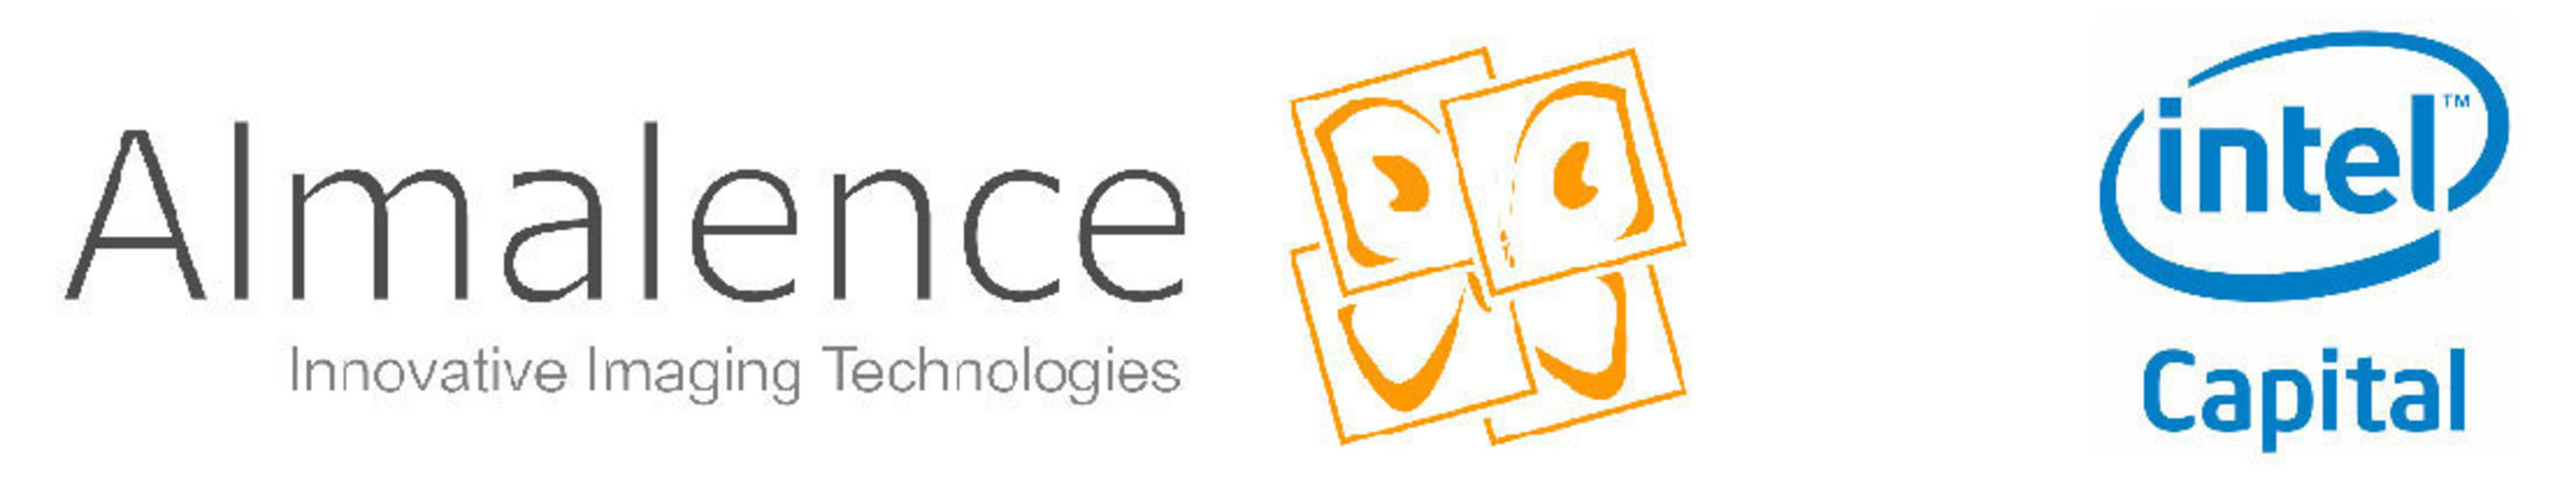 Almalence and Intel Capital logos